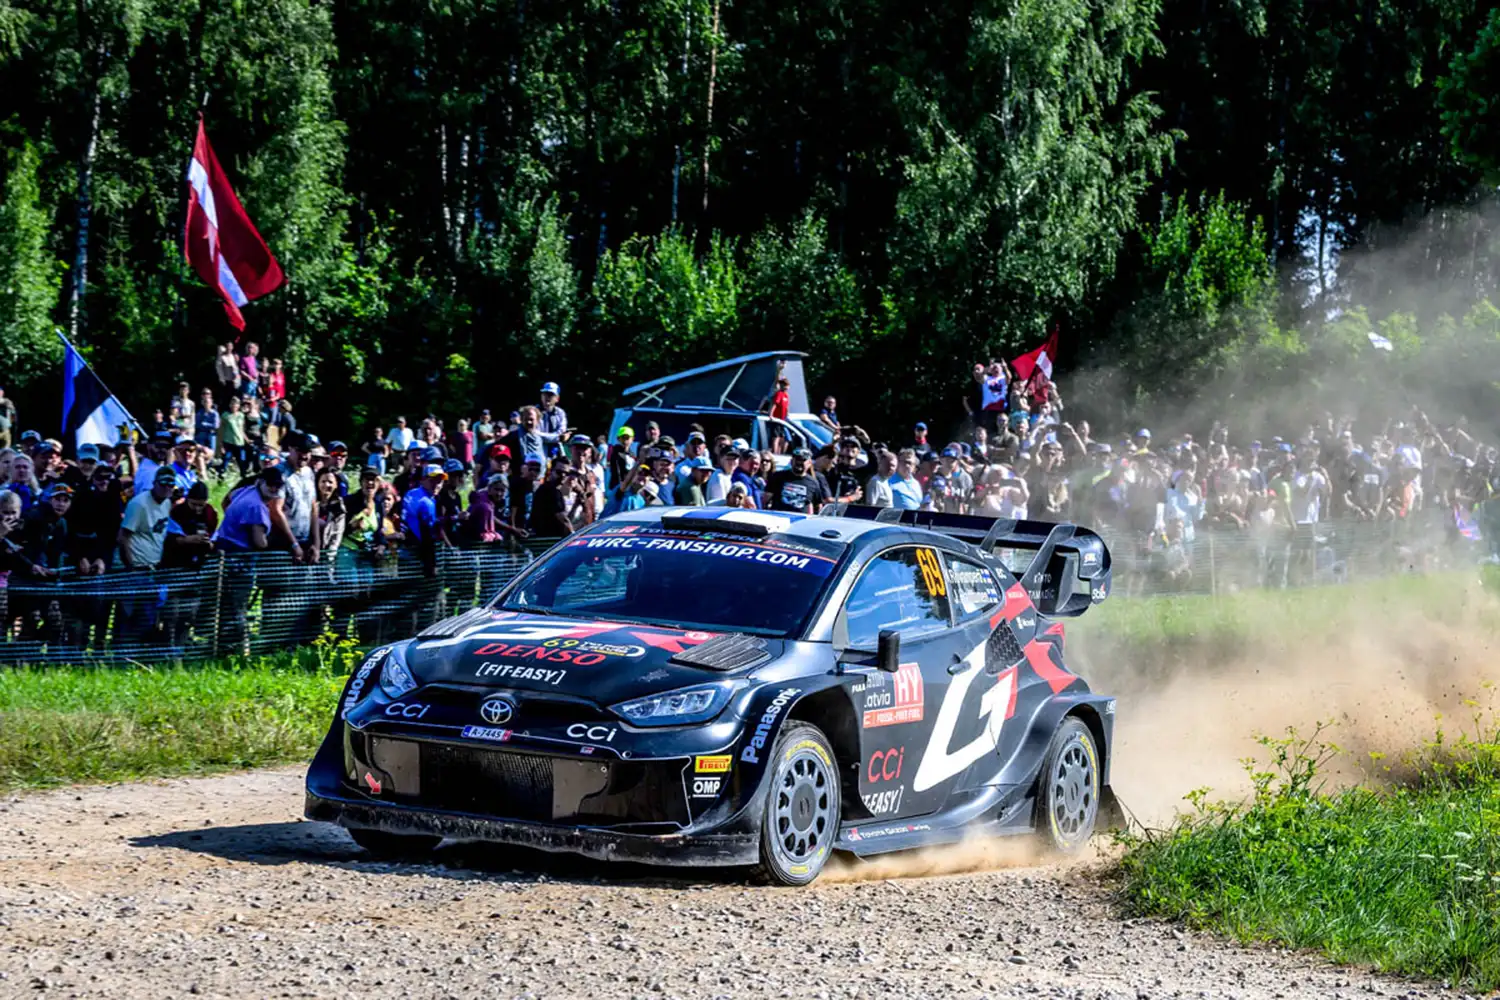 WRC – Rovanperä rules after stellar Saturday in Latvia